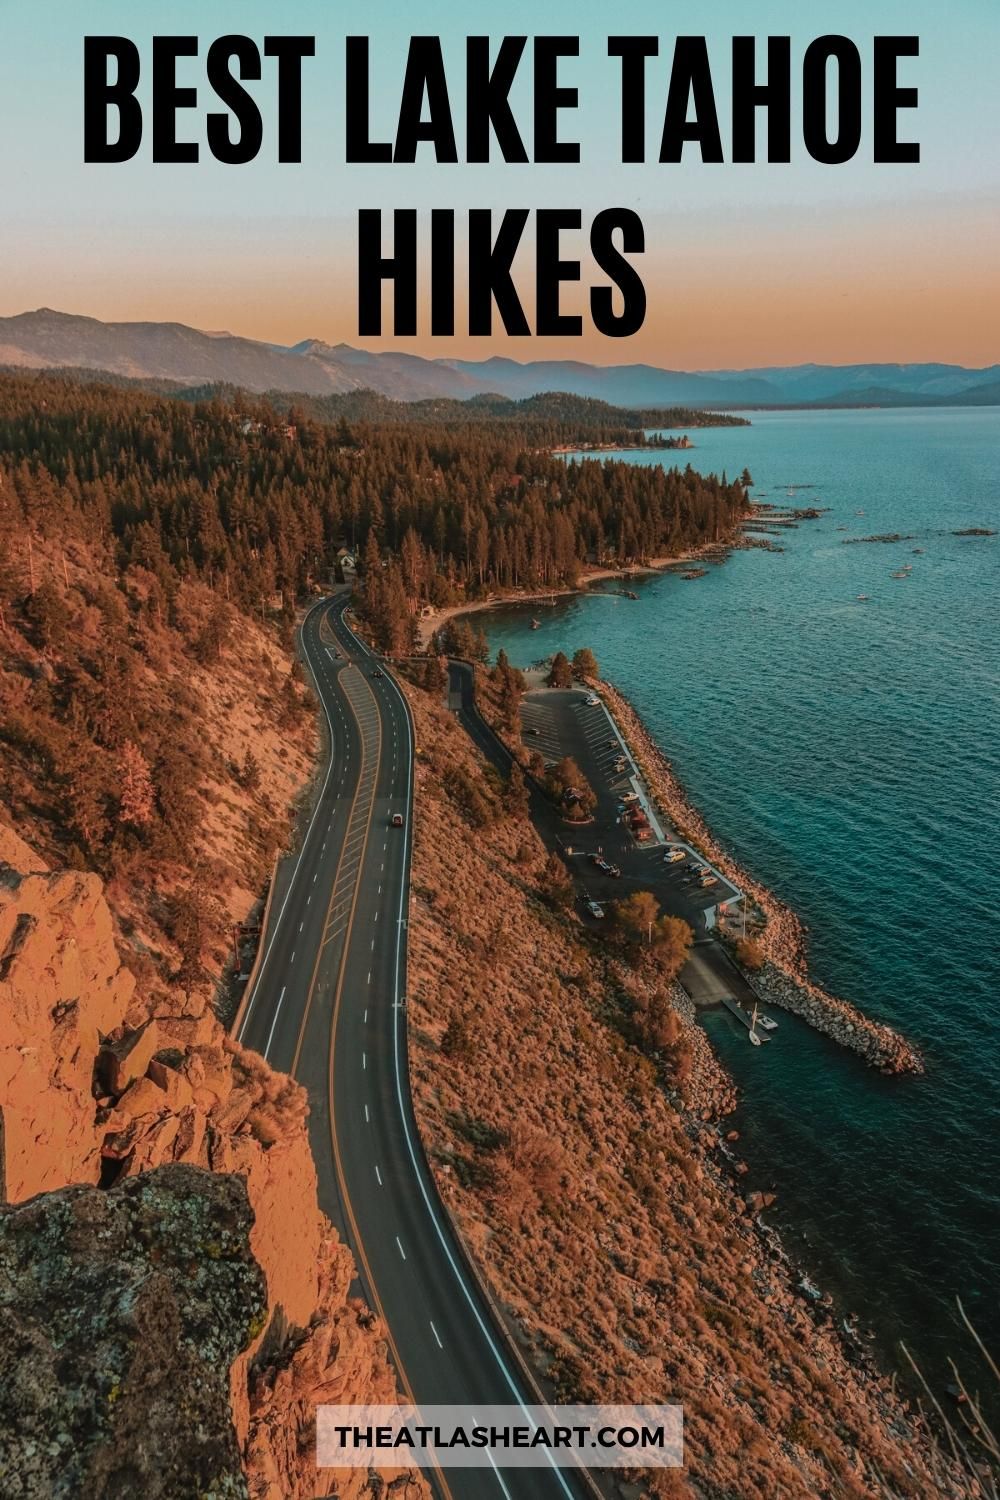 18 Best Lake Tahoe Hikes for Stunning Views & Mountain Scenery